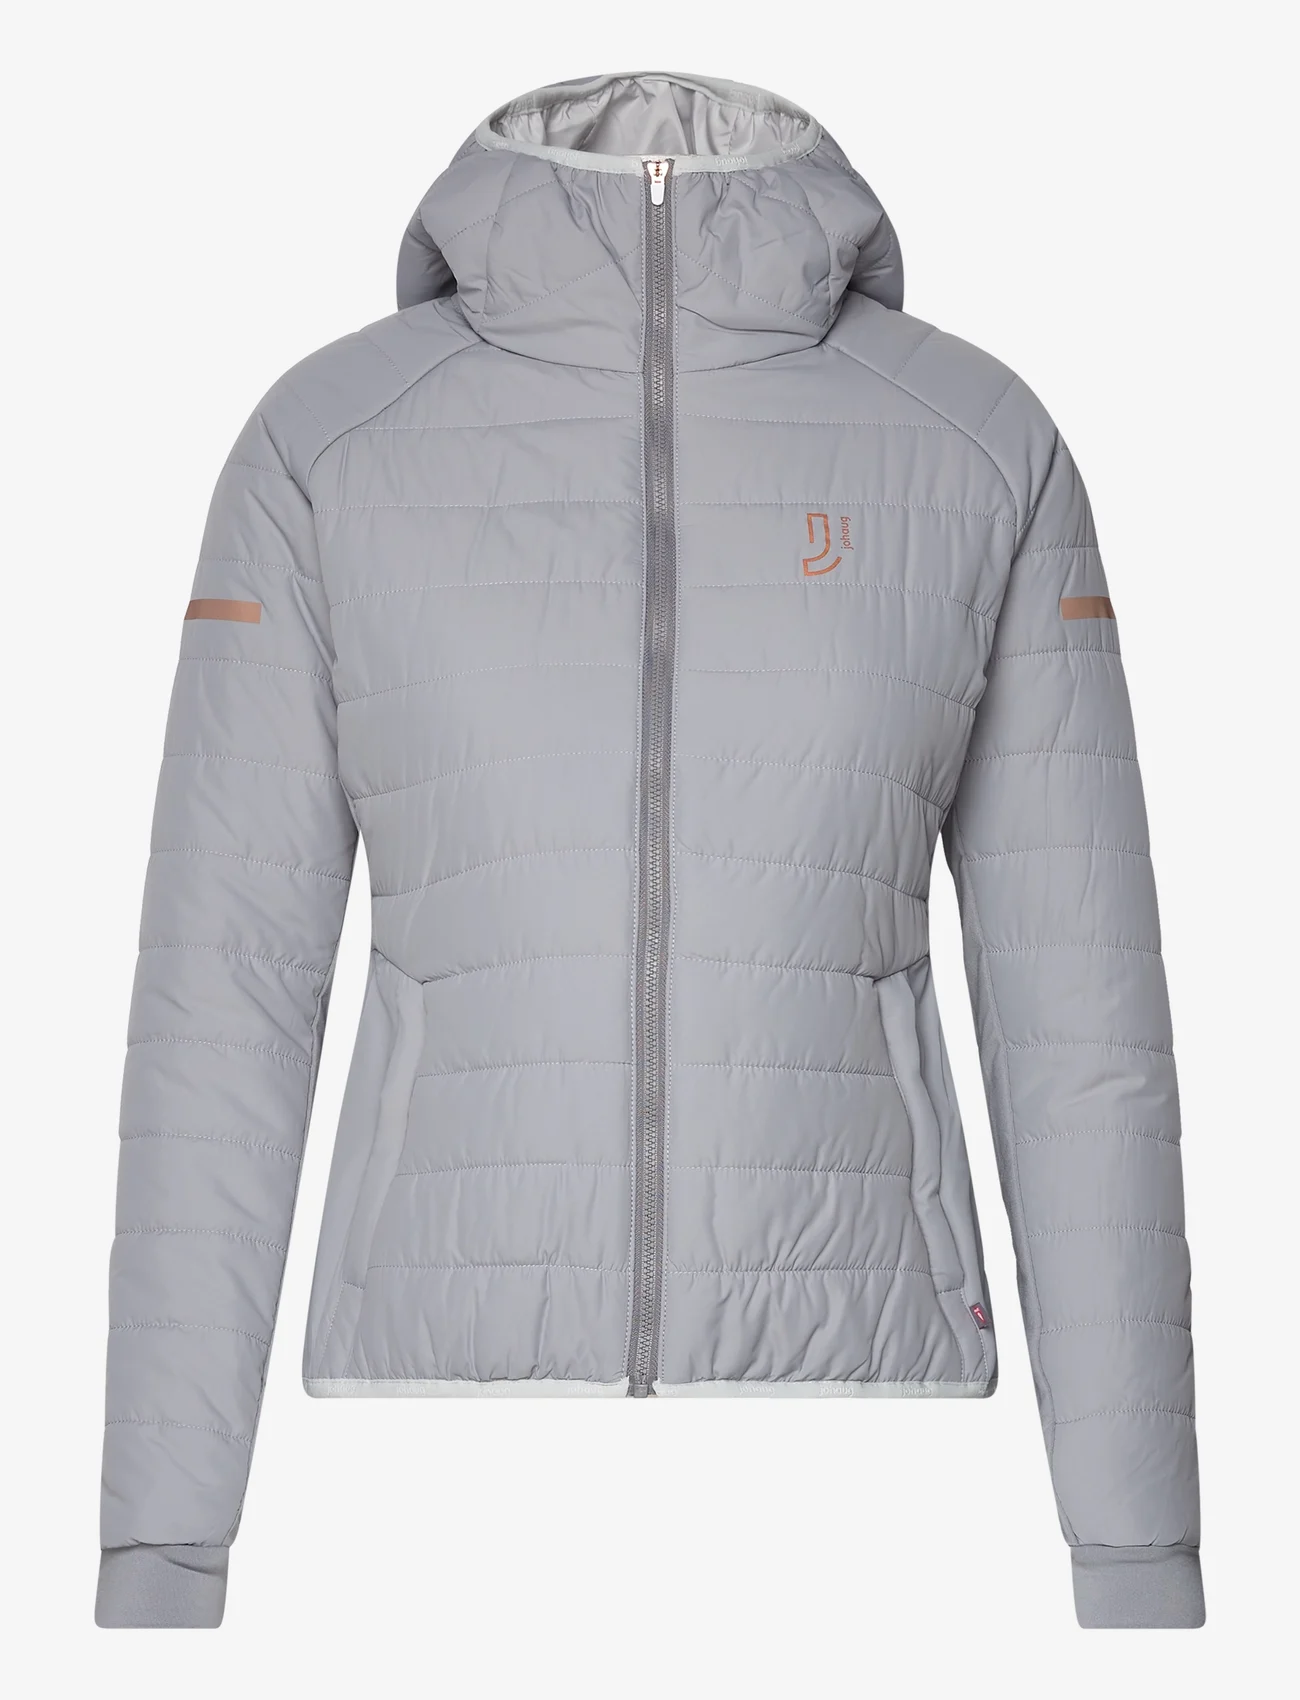 Johaug - Zone Primaloft Jacket - ski jackets - light grey - 0